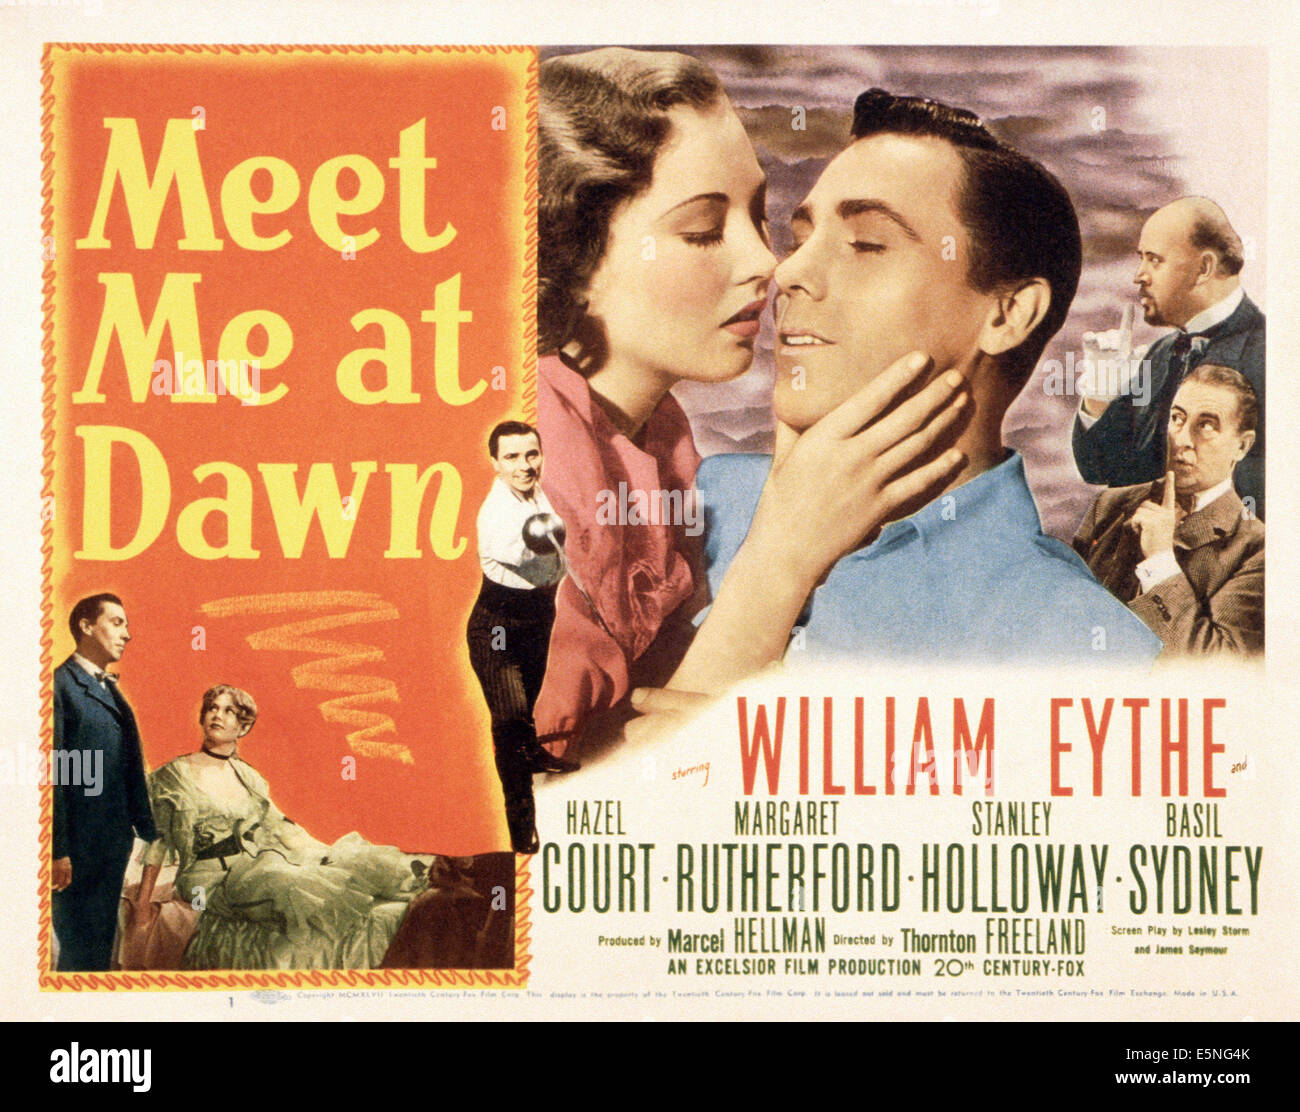 MEET ME AT DAWN, William Eythe (sword), kissing from left: Hazel Court, William Eythe, 1947, TM & Copyright © 20th Century Fox Stock Photo